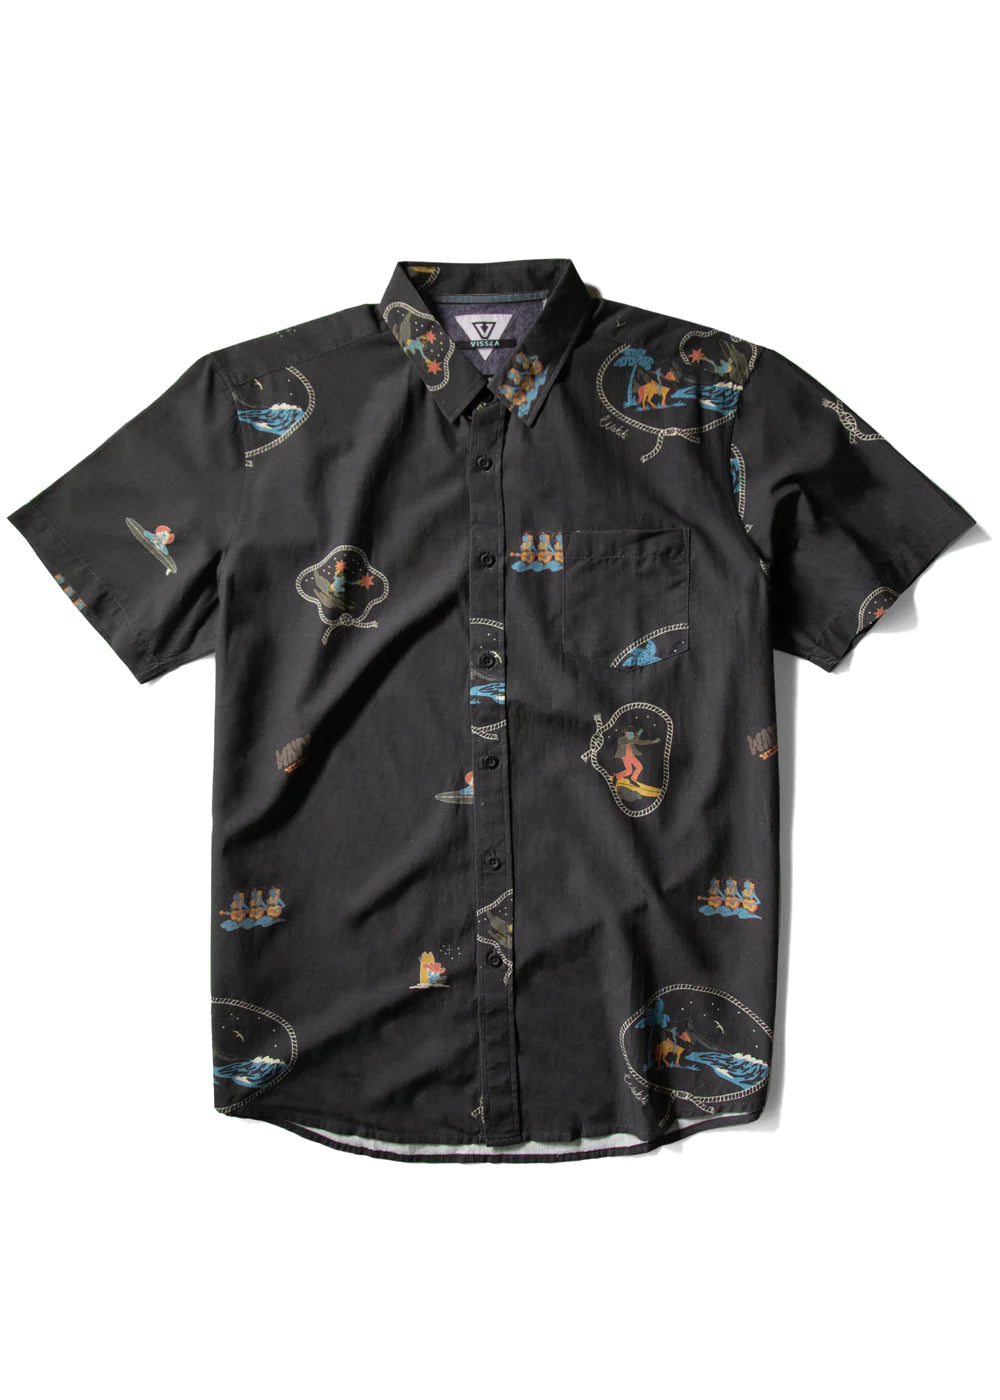 Vissla Soren Wavy West Eco Shirt - Phantom - Sun Diego Boardshop